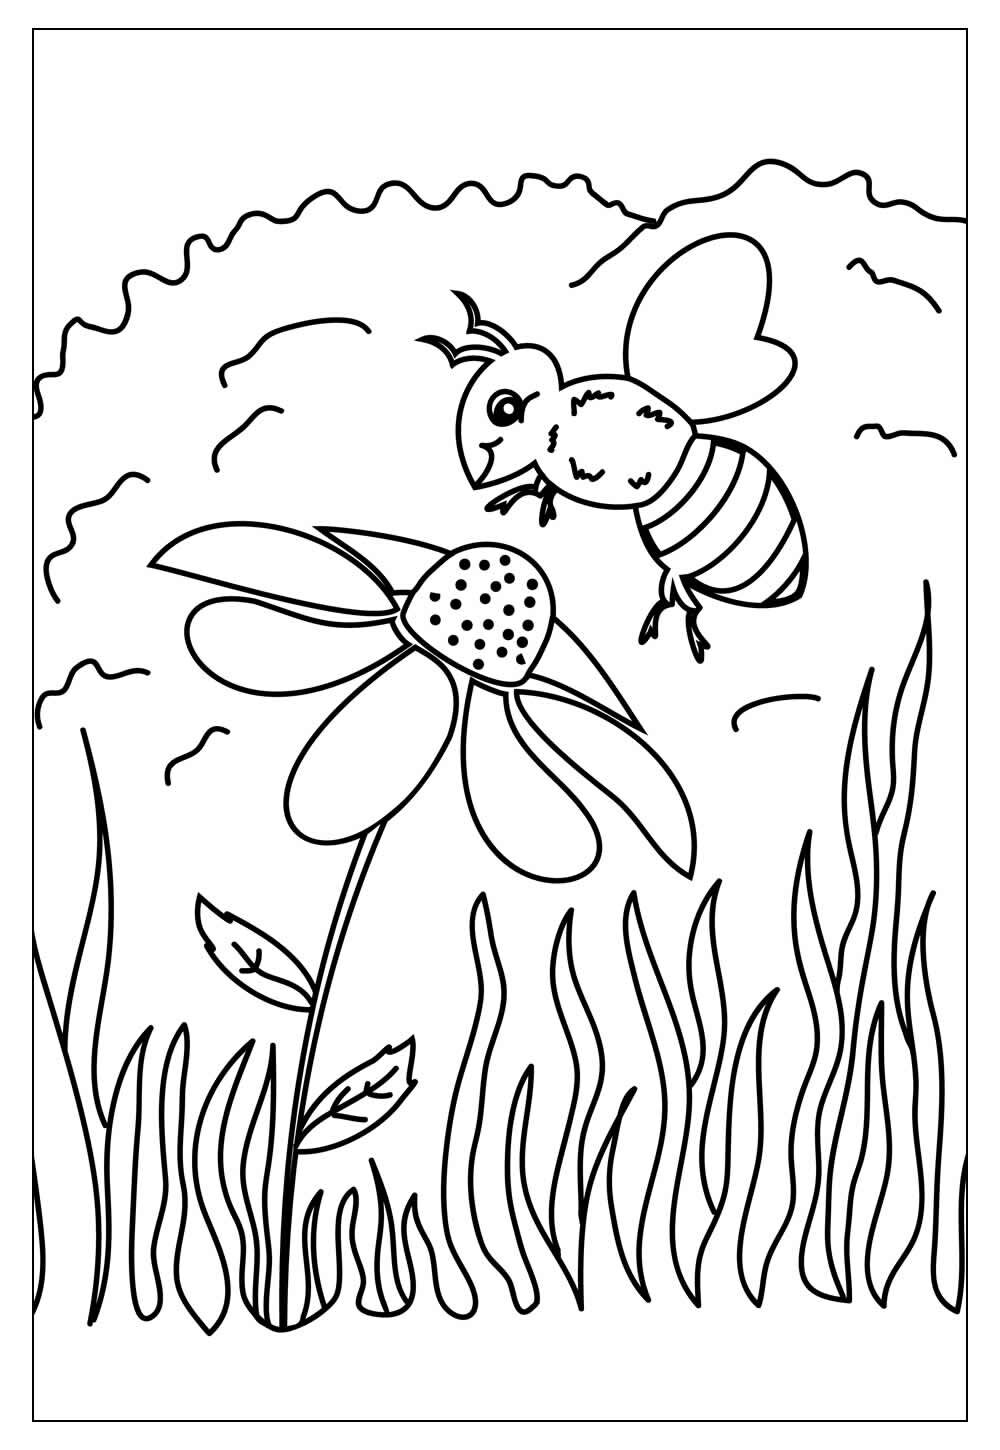 Desenhos para colorir de desenho da vespiquen, a abelha pokémon para colorir  